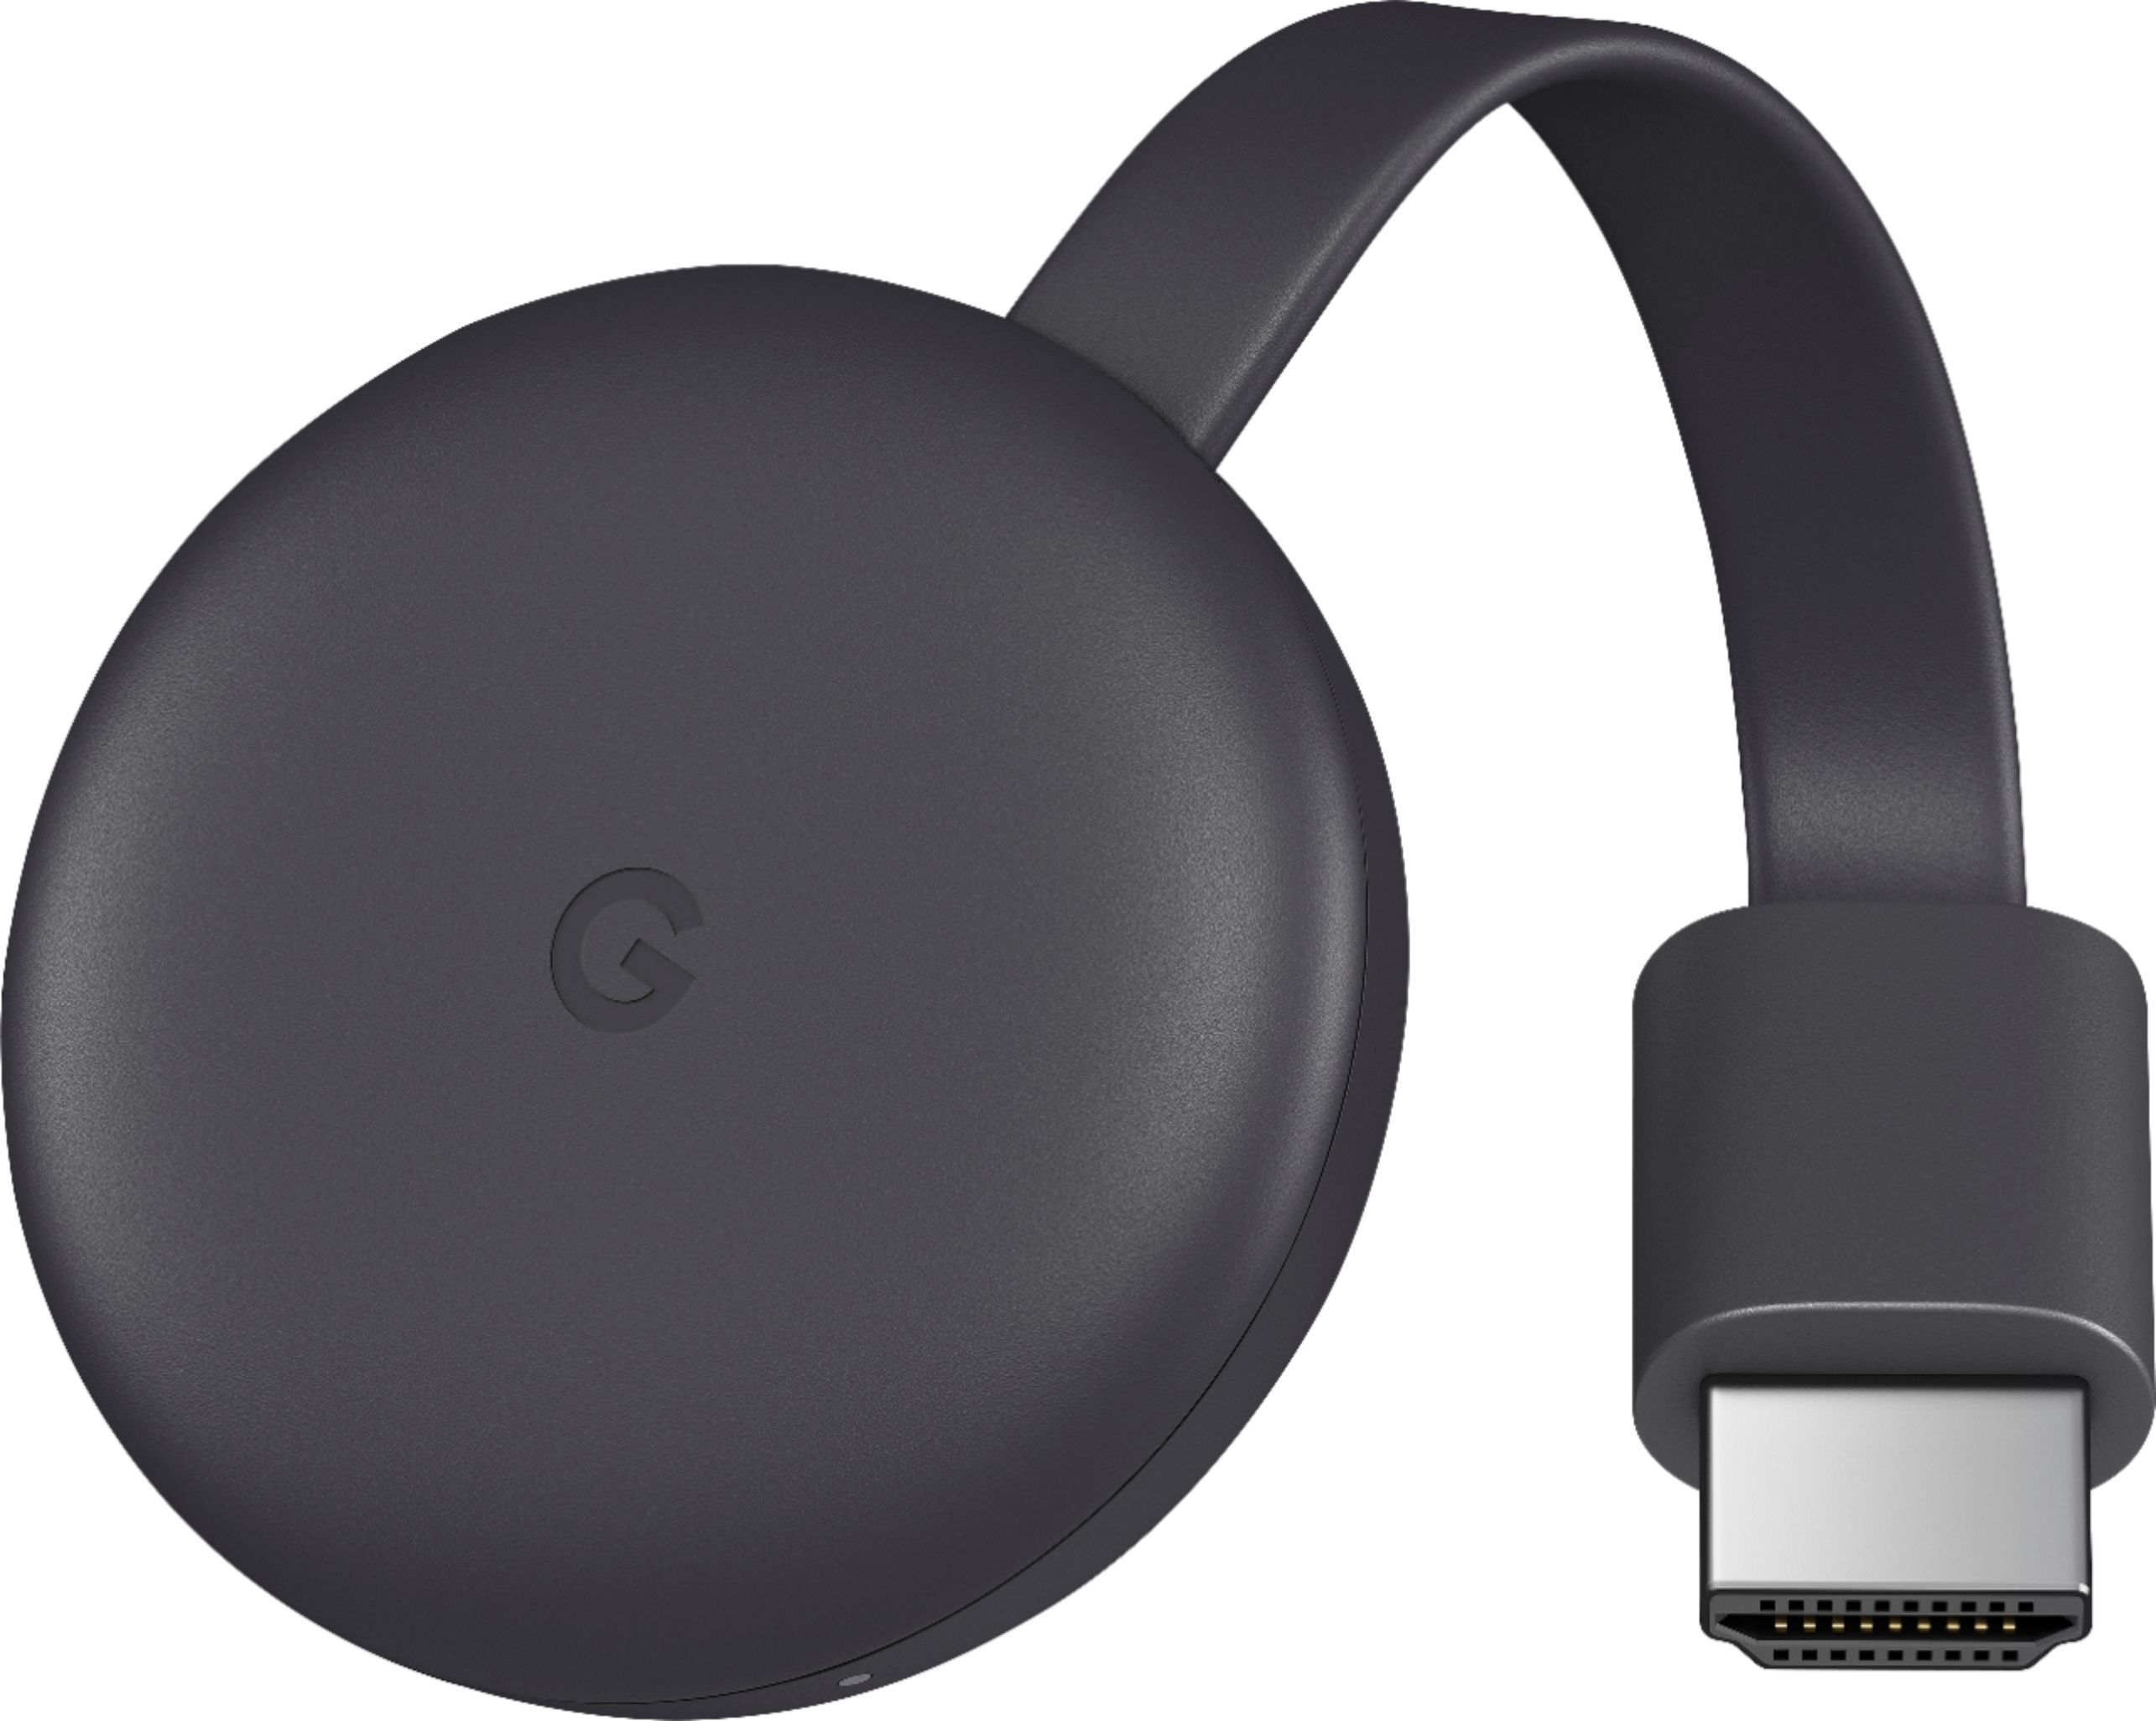 Google Chromecast Streaming Media Player Charcoal GA00439-US - Best Buy | Best Buy U.S.